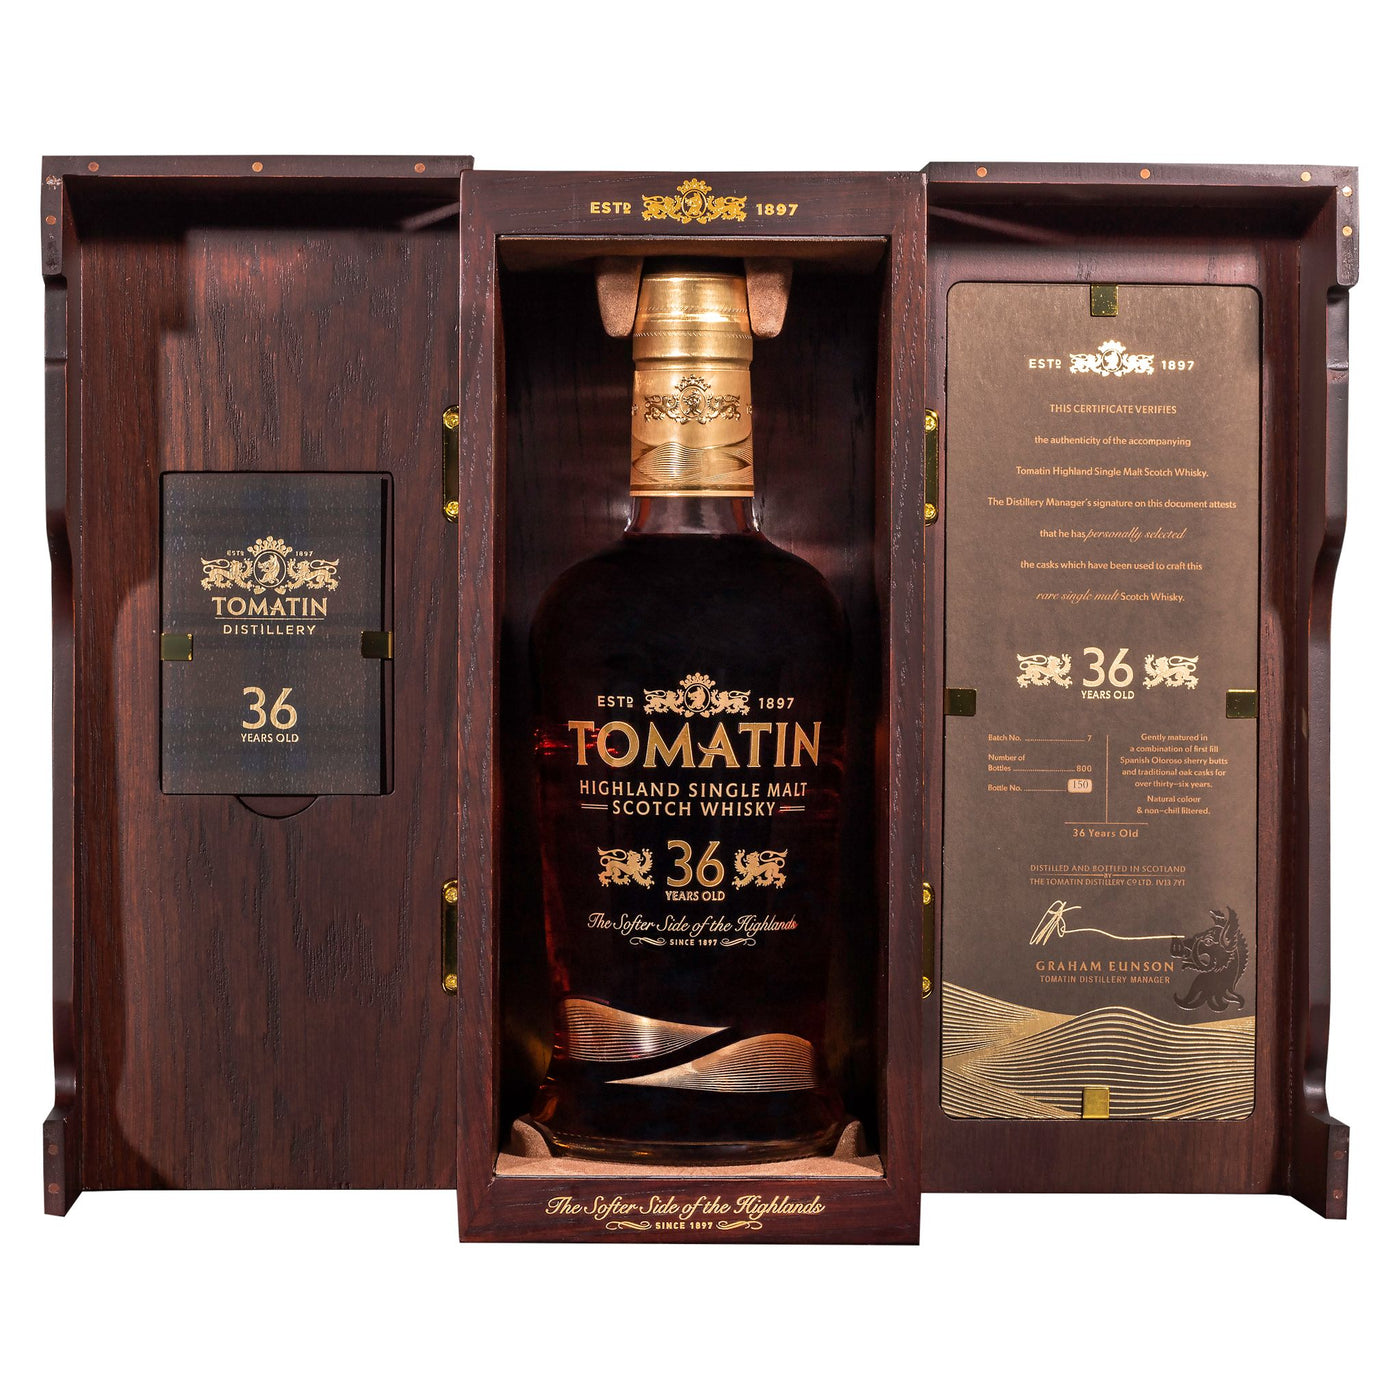 7 Scotch at Batch BUY] Highland Malt Whisky Tomatin Year 36 Old Rare Casks | Single No. |